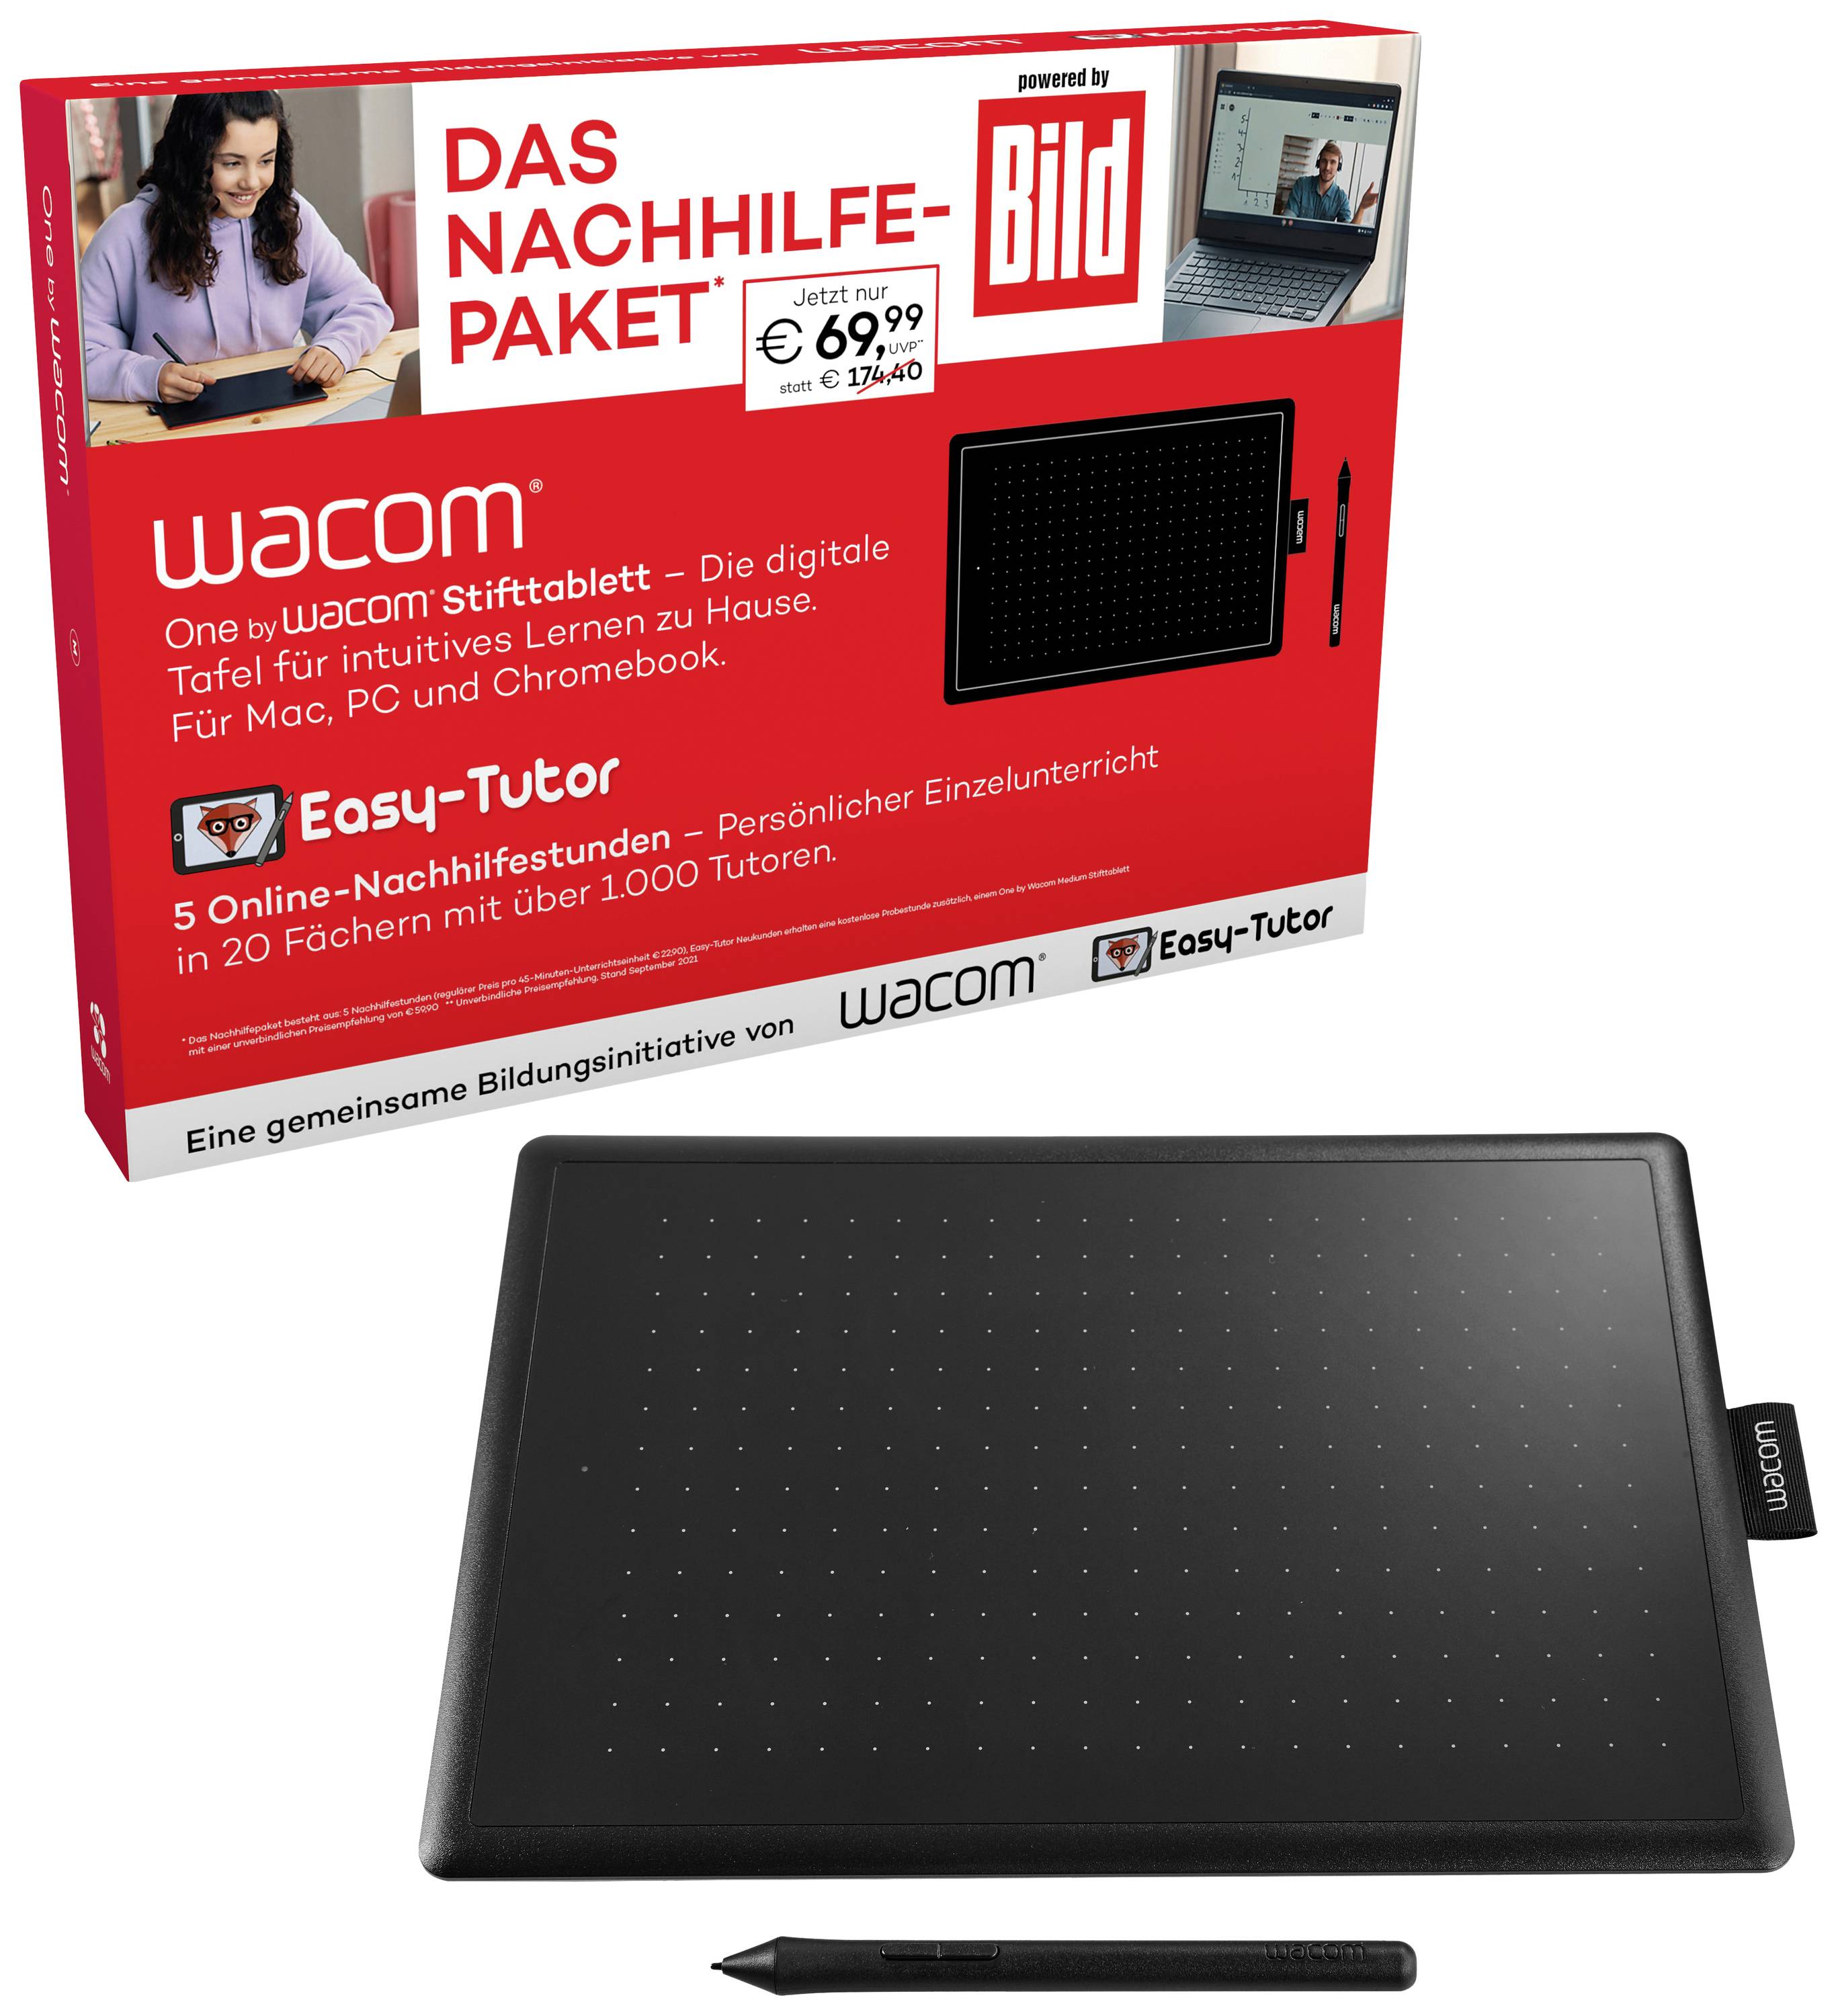 One Wacom - kaufen Nachhilfepaket Kabelgebunden Das Schwarz, Rot Grafiktablett